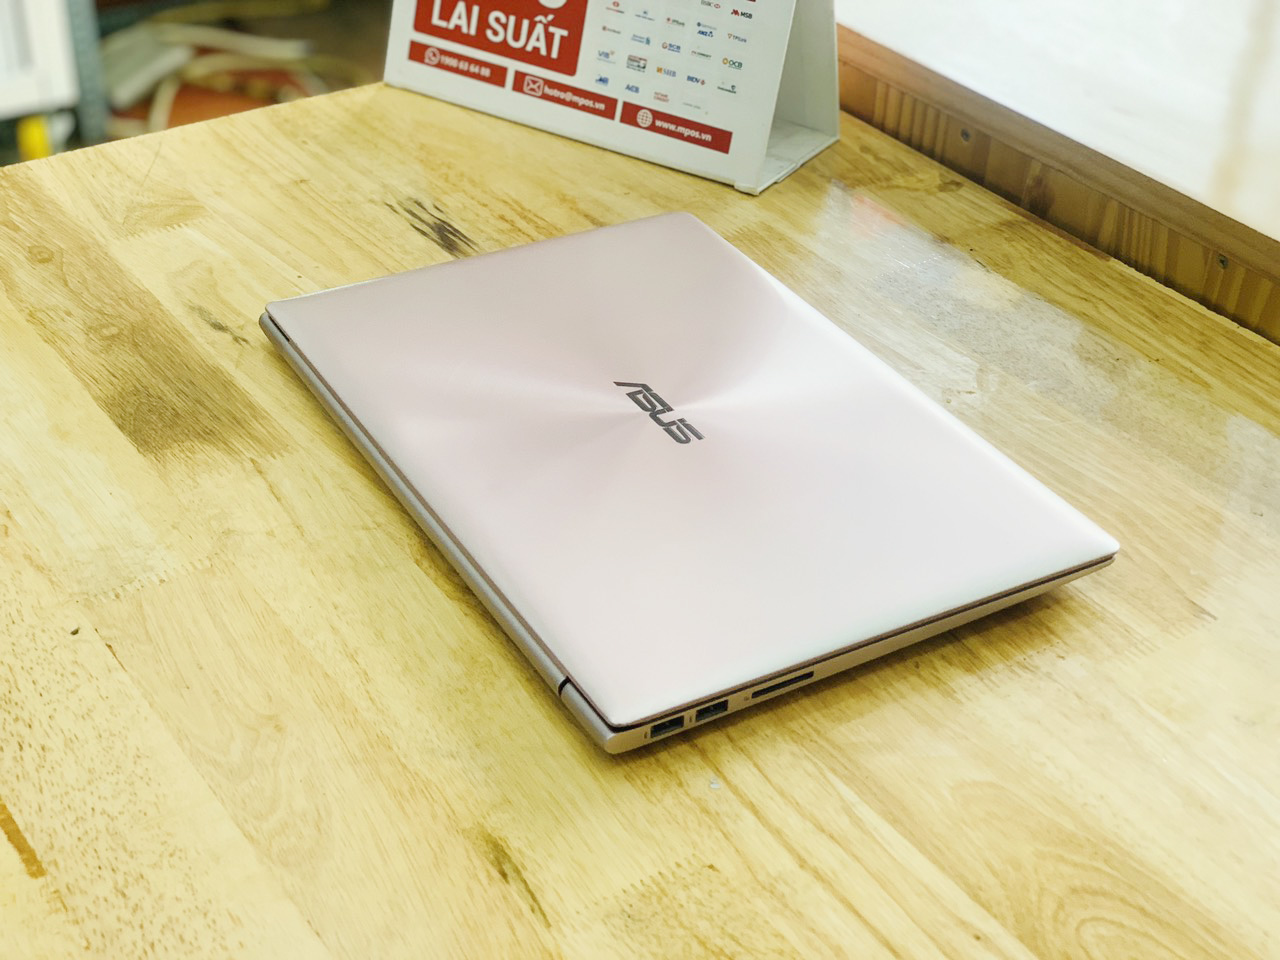 Asus Zenbook UX303UA i5-6200U Ram 4GB SSD 128G 13.3 inch Full HD Mỏng Đẹp